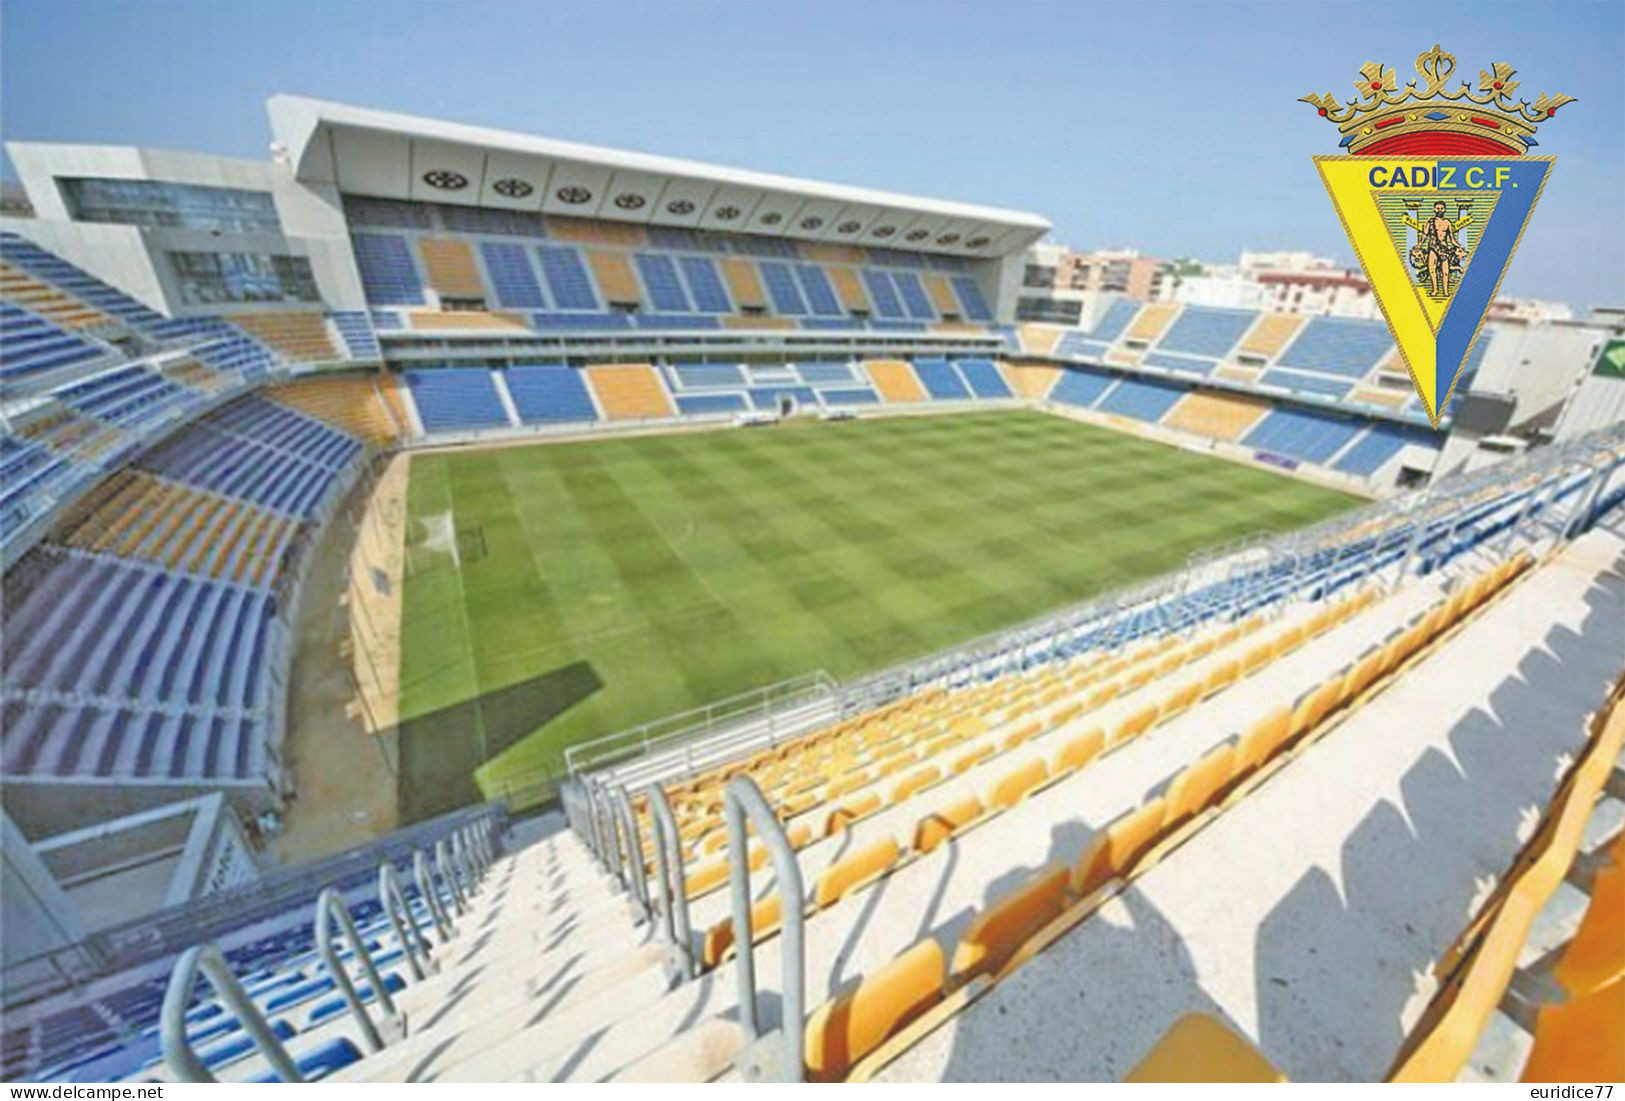 Stadium Nuevo Mirandilla (Cadiz CF) Postcard - Size: 15x10 Cm. Aprox. - Fussball